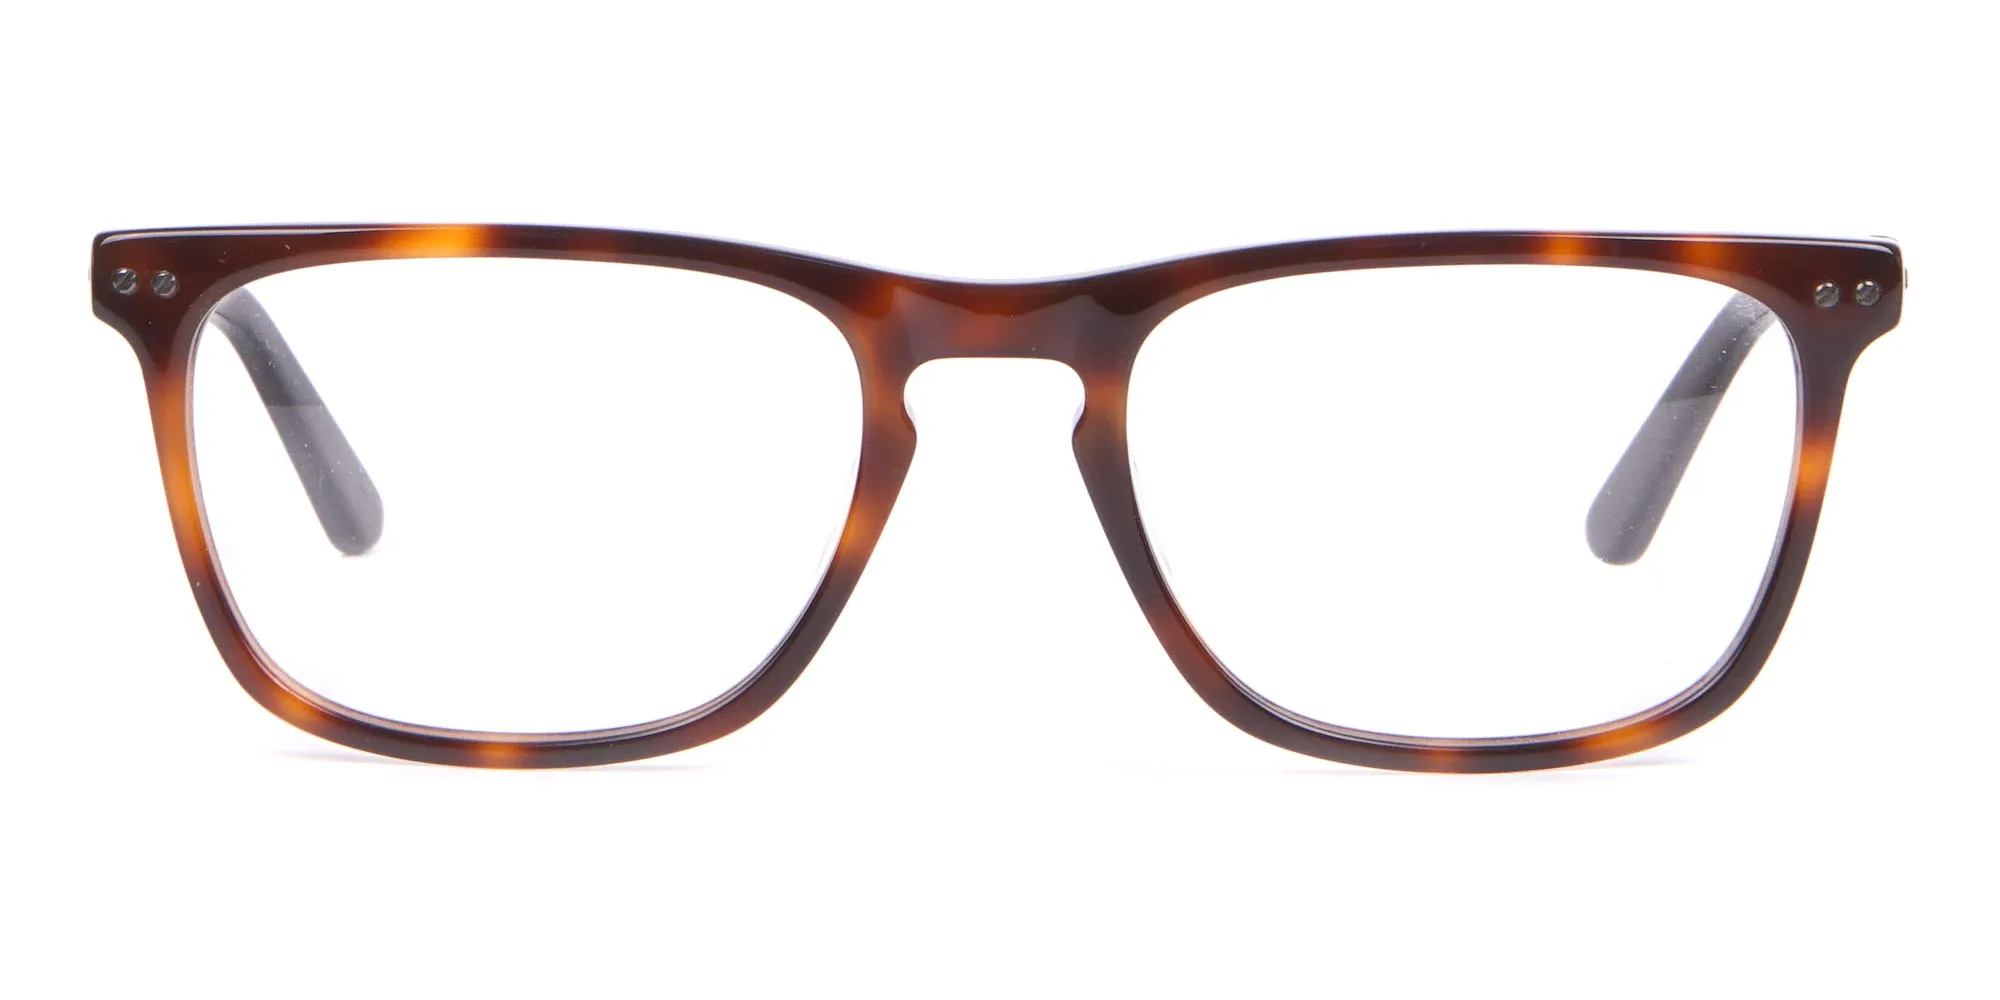 Calvin Klein CK18513 Rectangular Glasses in Brown Tortoise-2